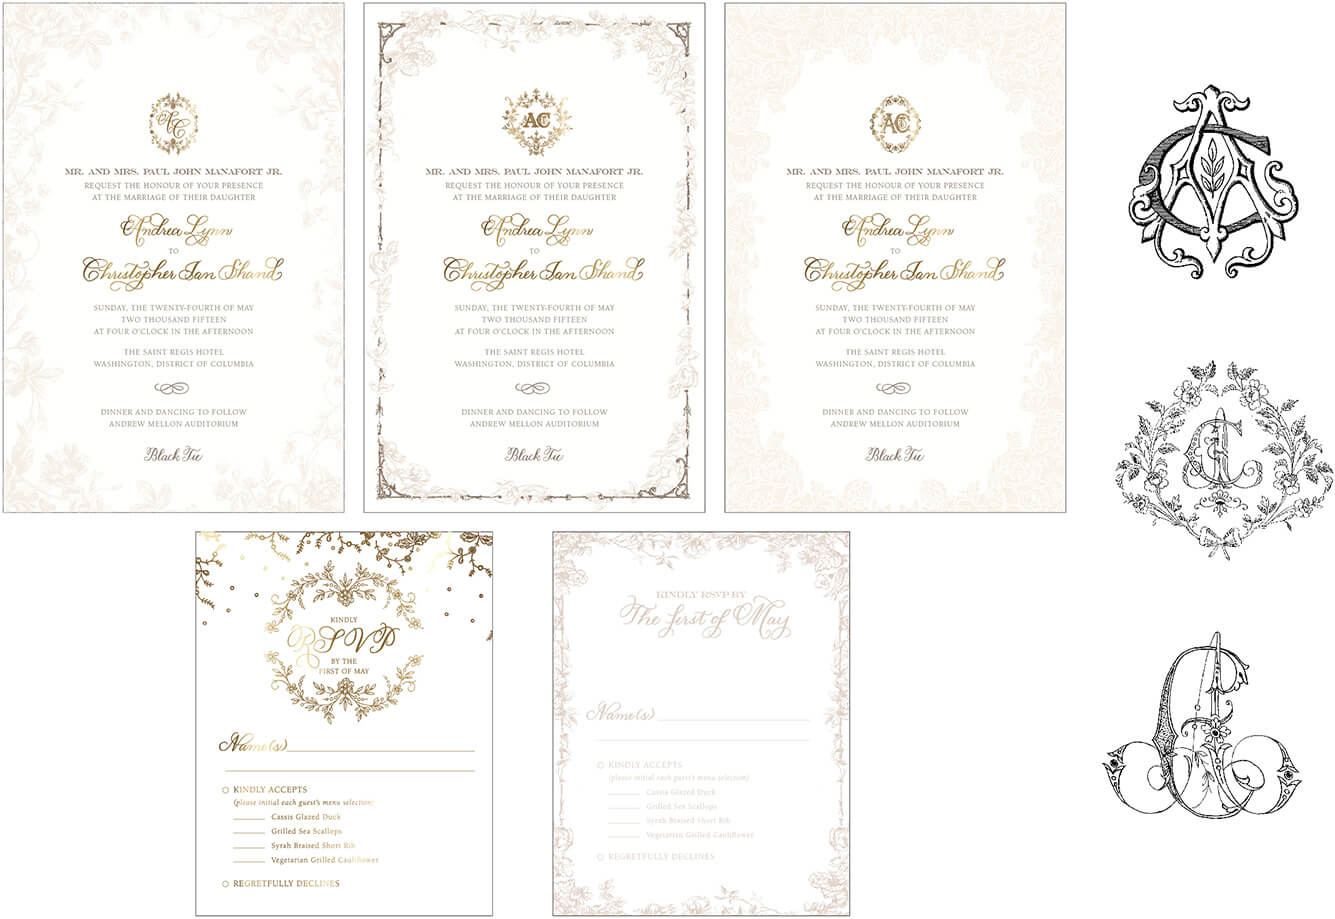 Alternate invitation designs with floral borders